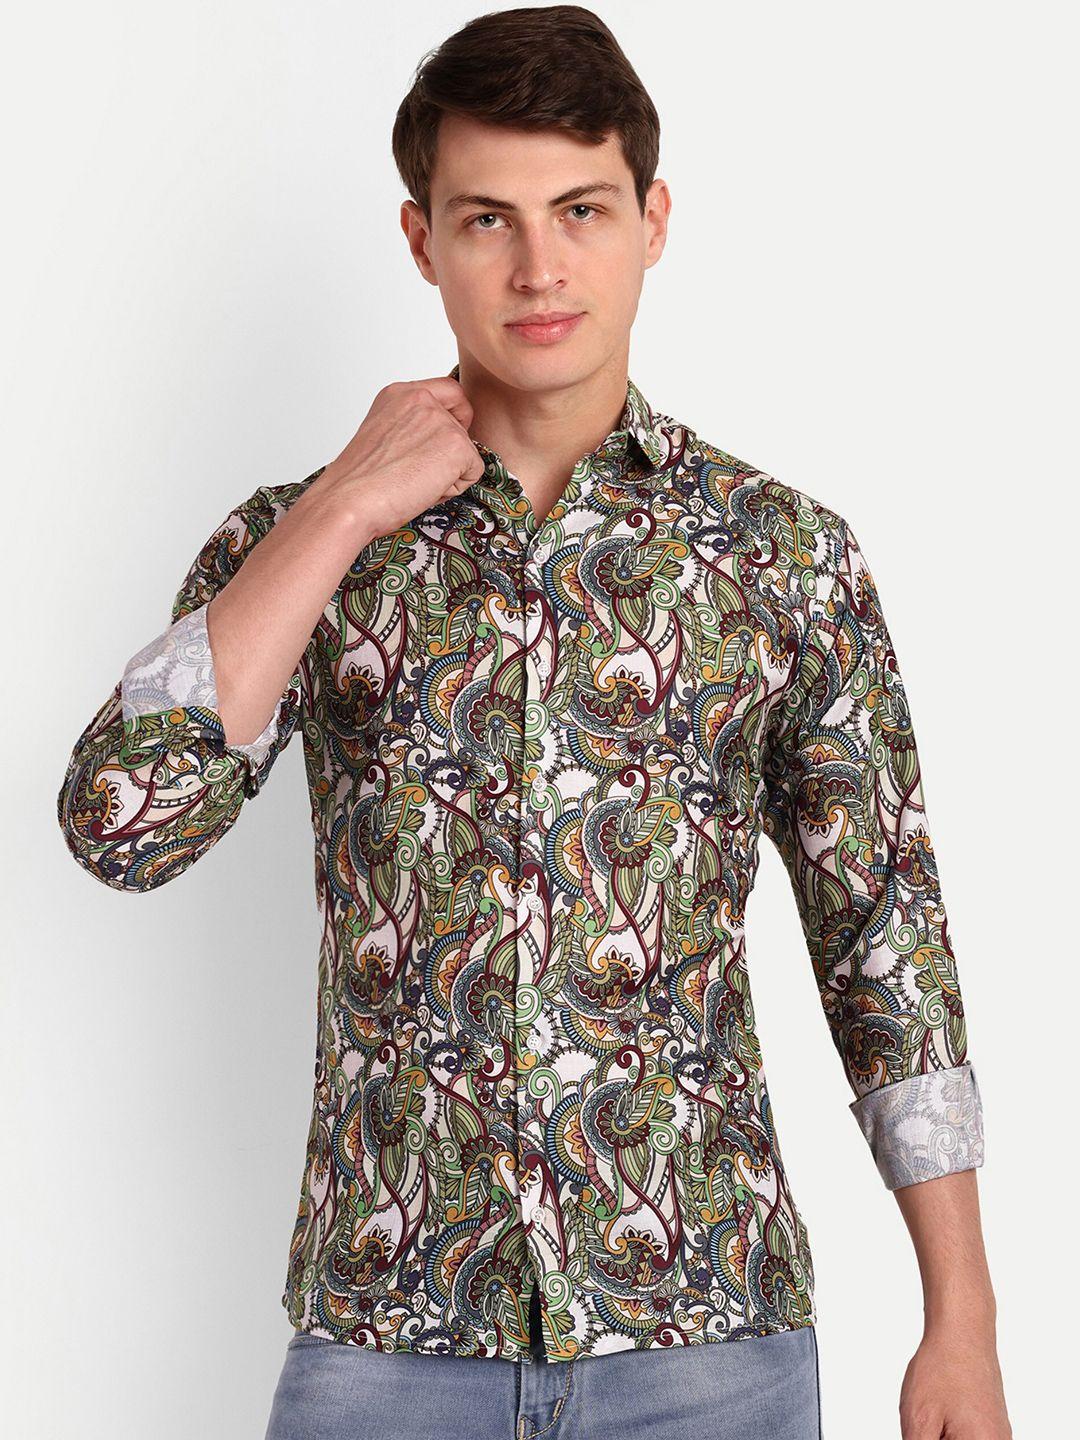 colorwings slim fit ethnic motifs printed casual shirt